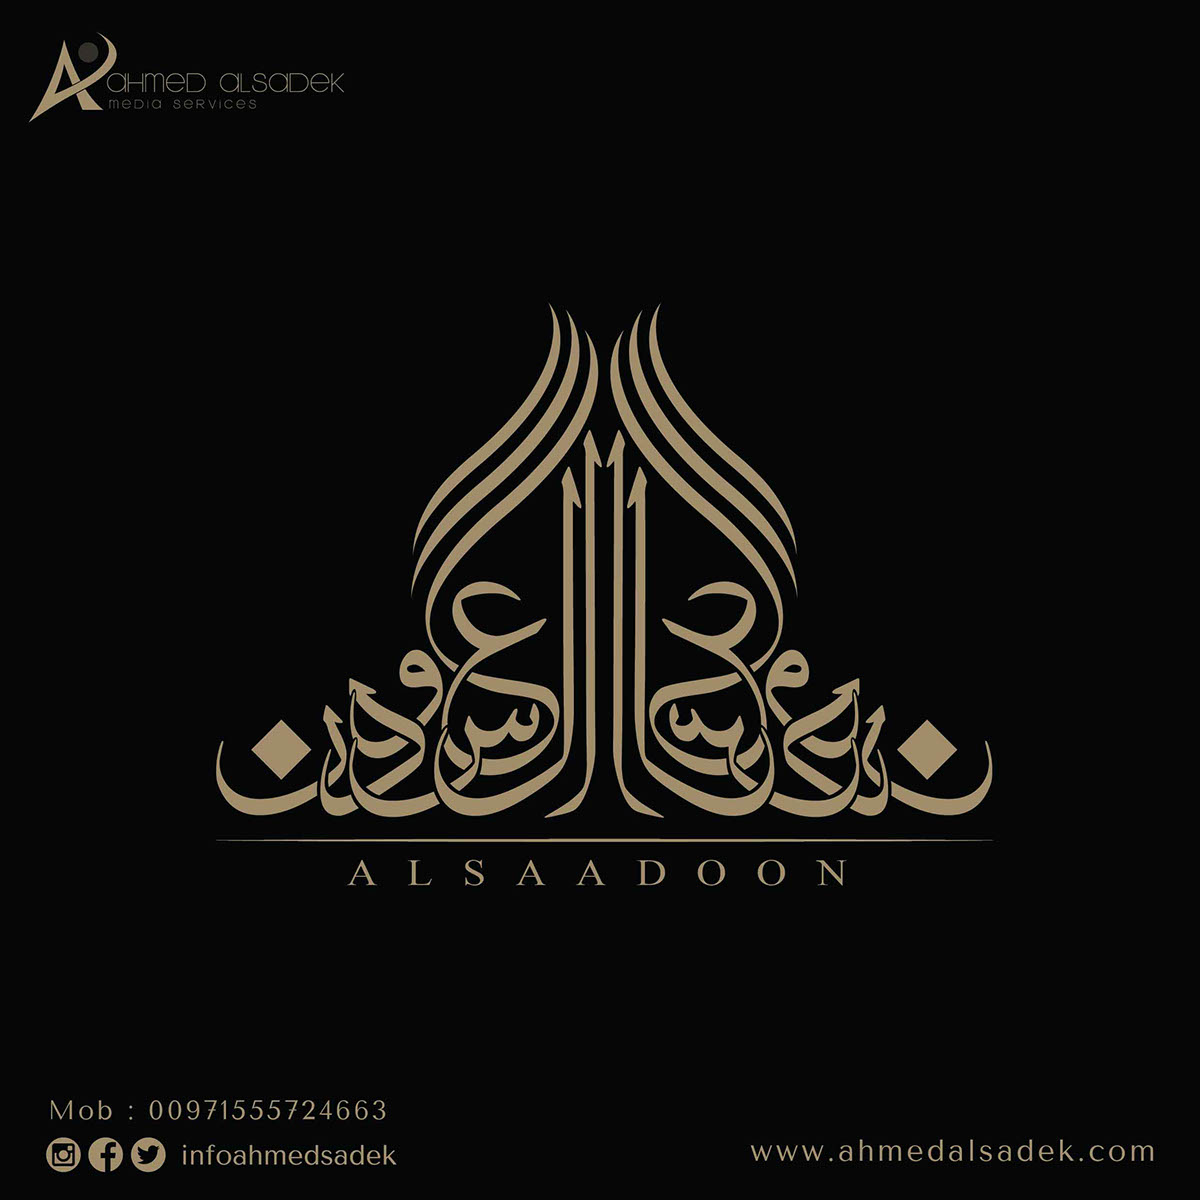 Logo Design arabic calligraphy تصميم مصمم شعار احمد الصادق